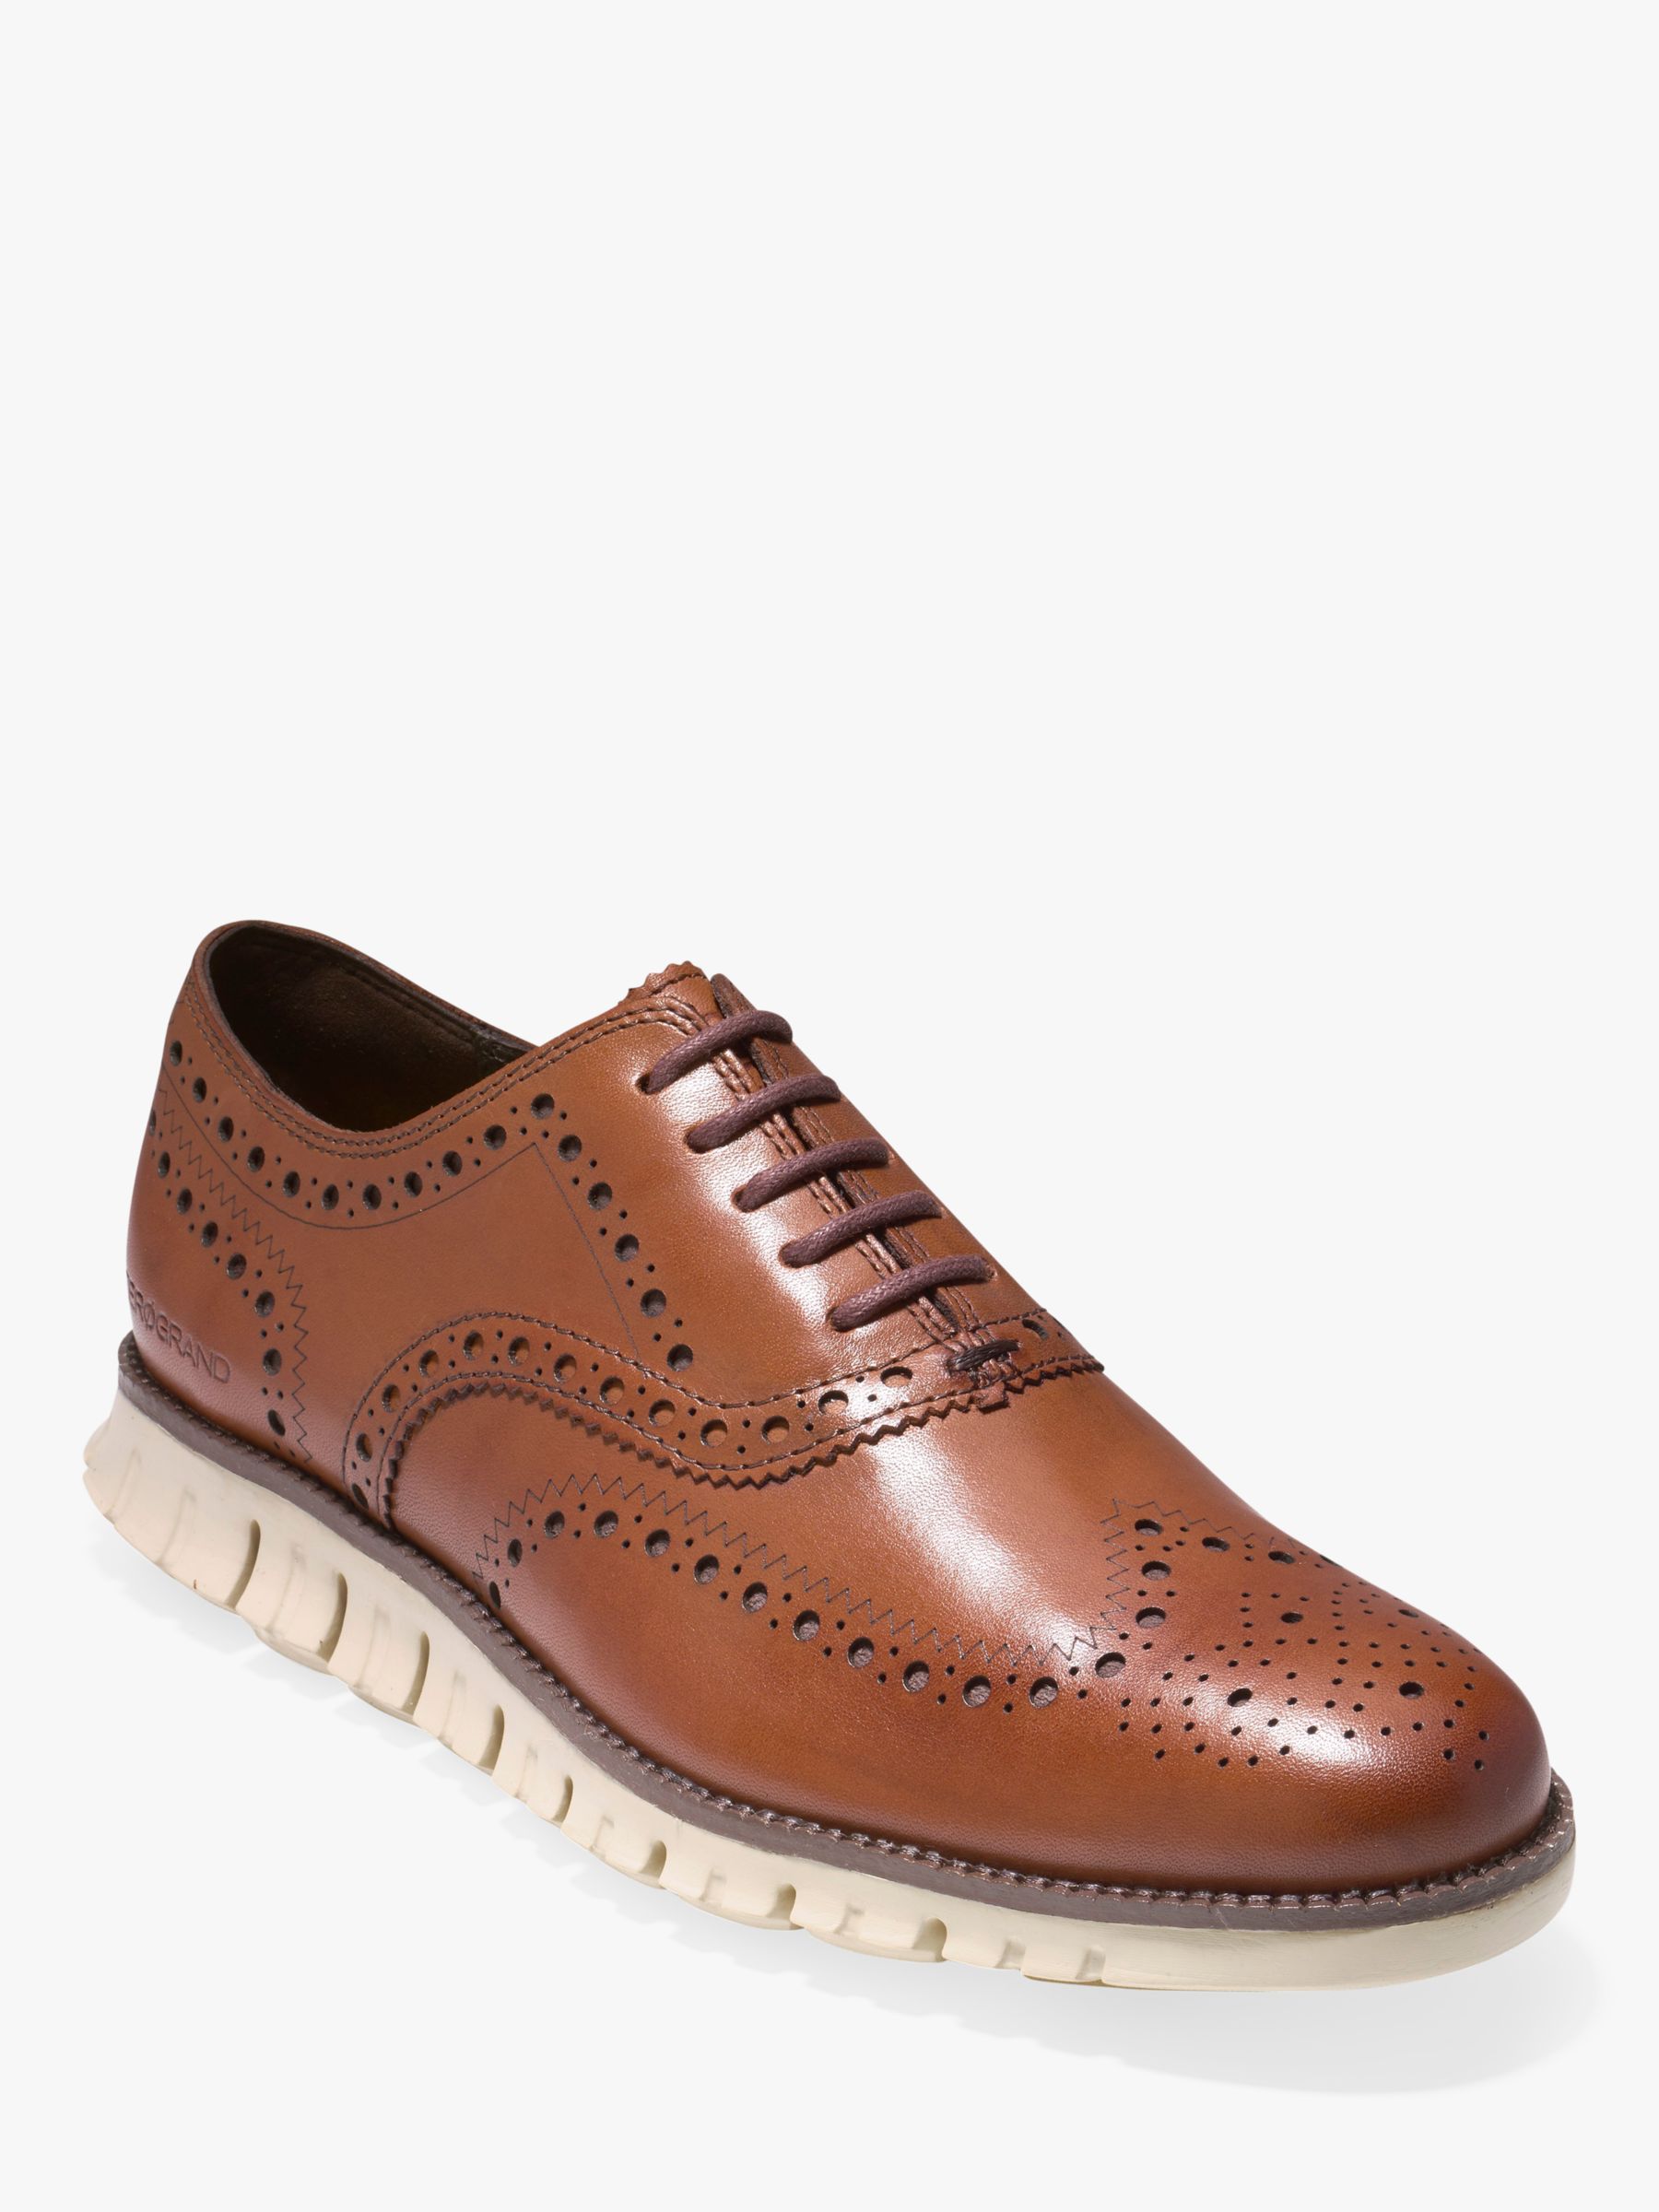 british tan wingtip shoes